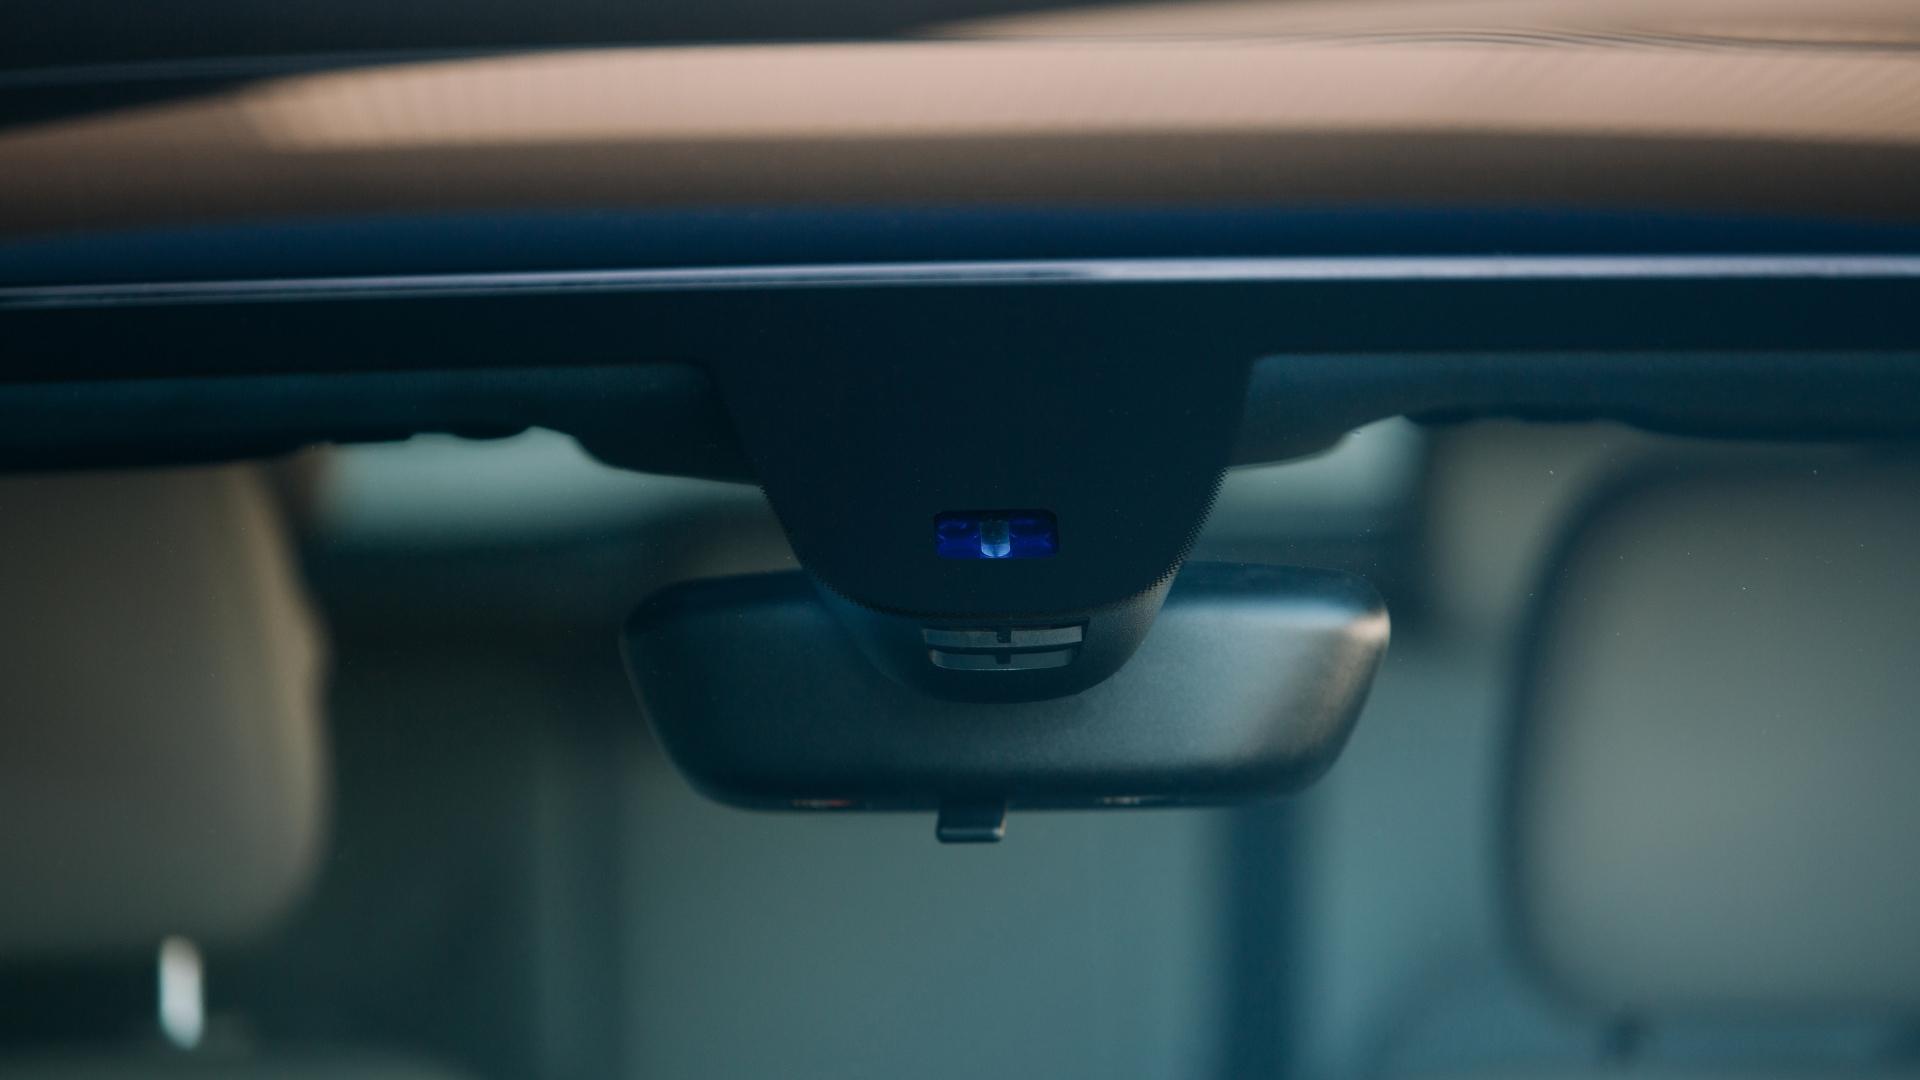 Close up photo of rain sensor on a modern vehicle